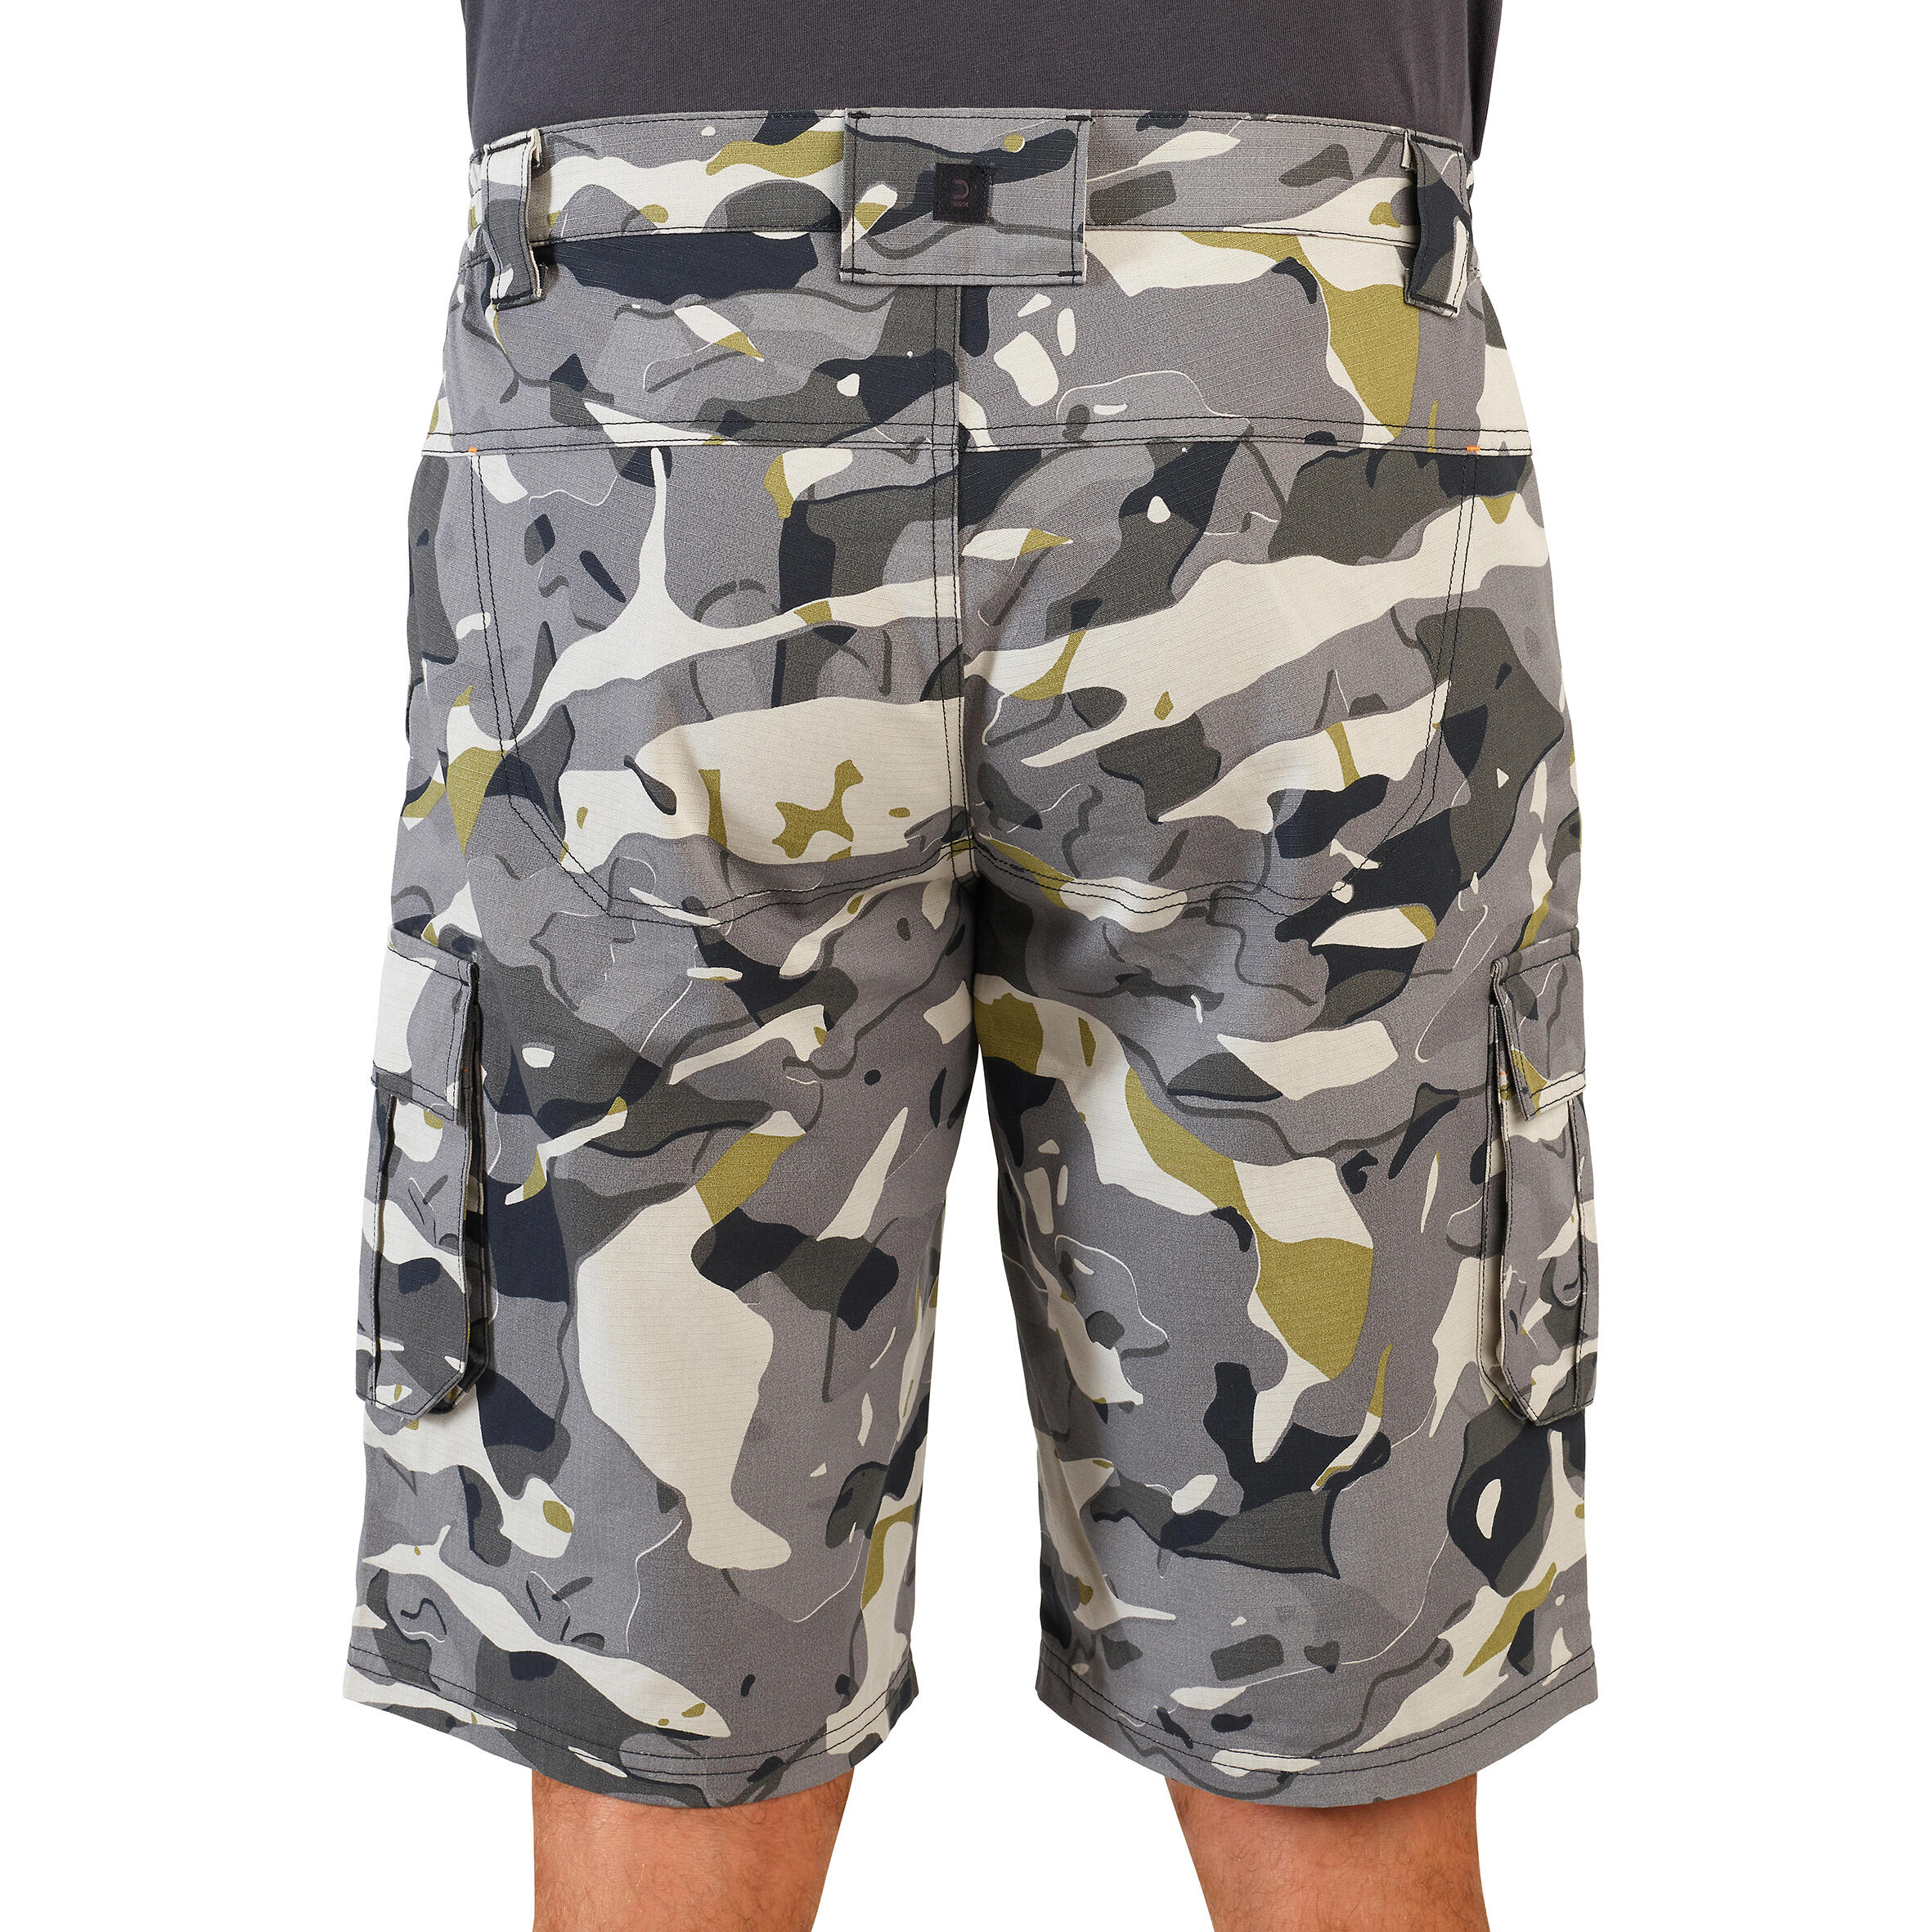 Bermuda shorts 500 - Woodland V1 mineral grey LTD camouflage 4/13